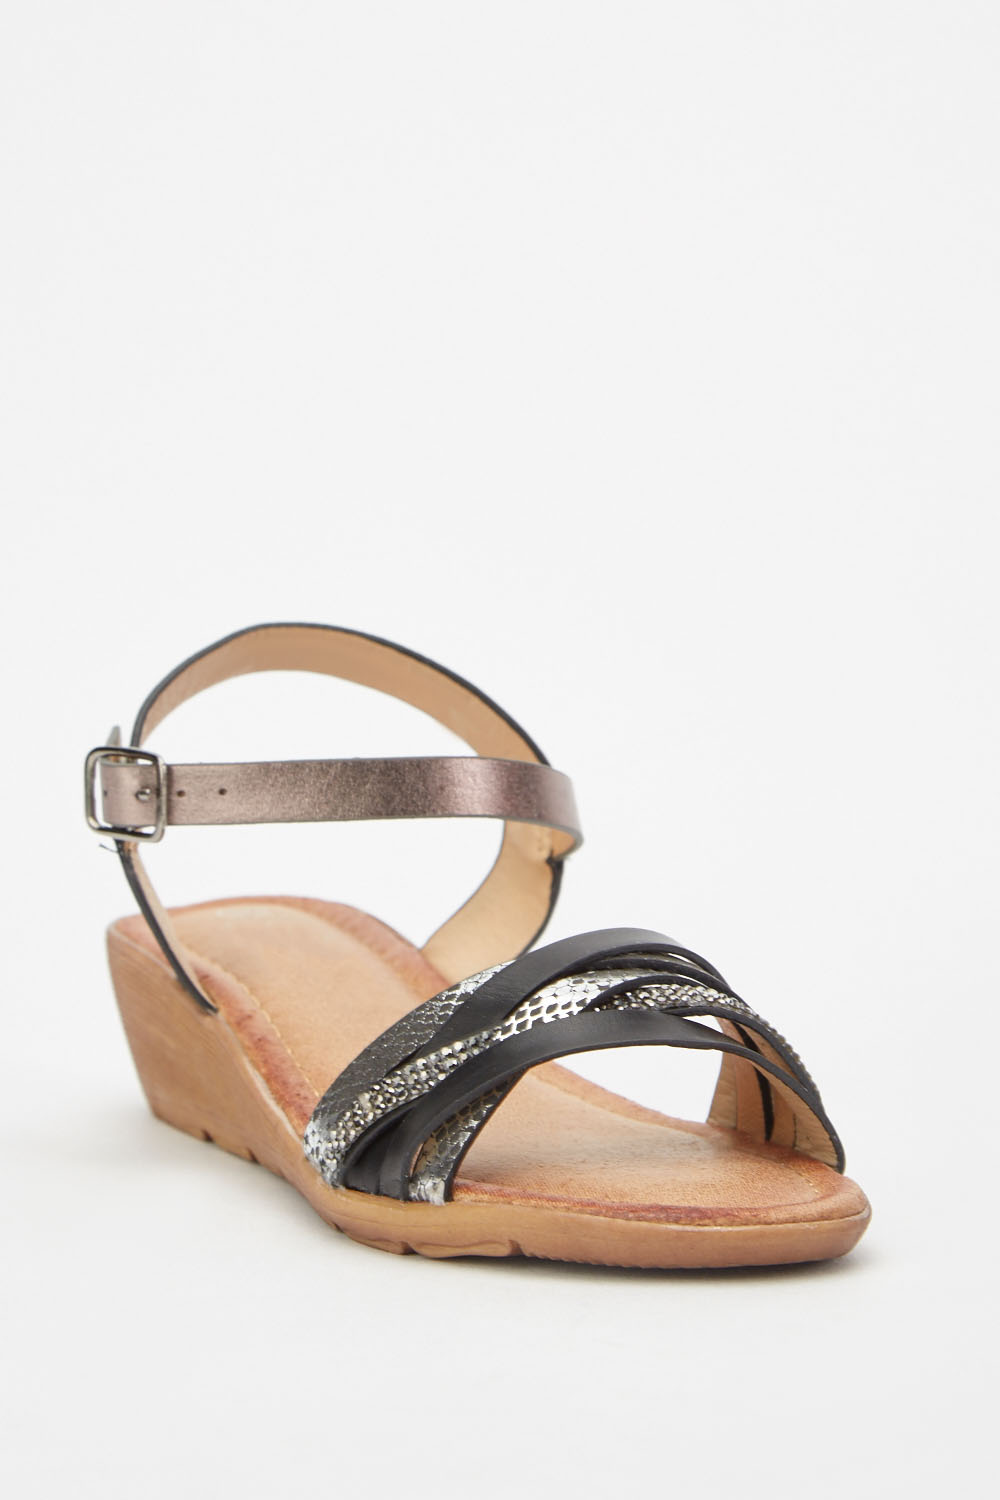 Metallic Criss Cross Strappy Sandals - Just $7